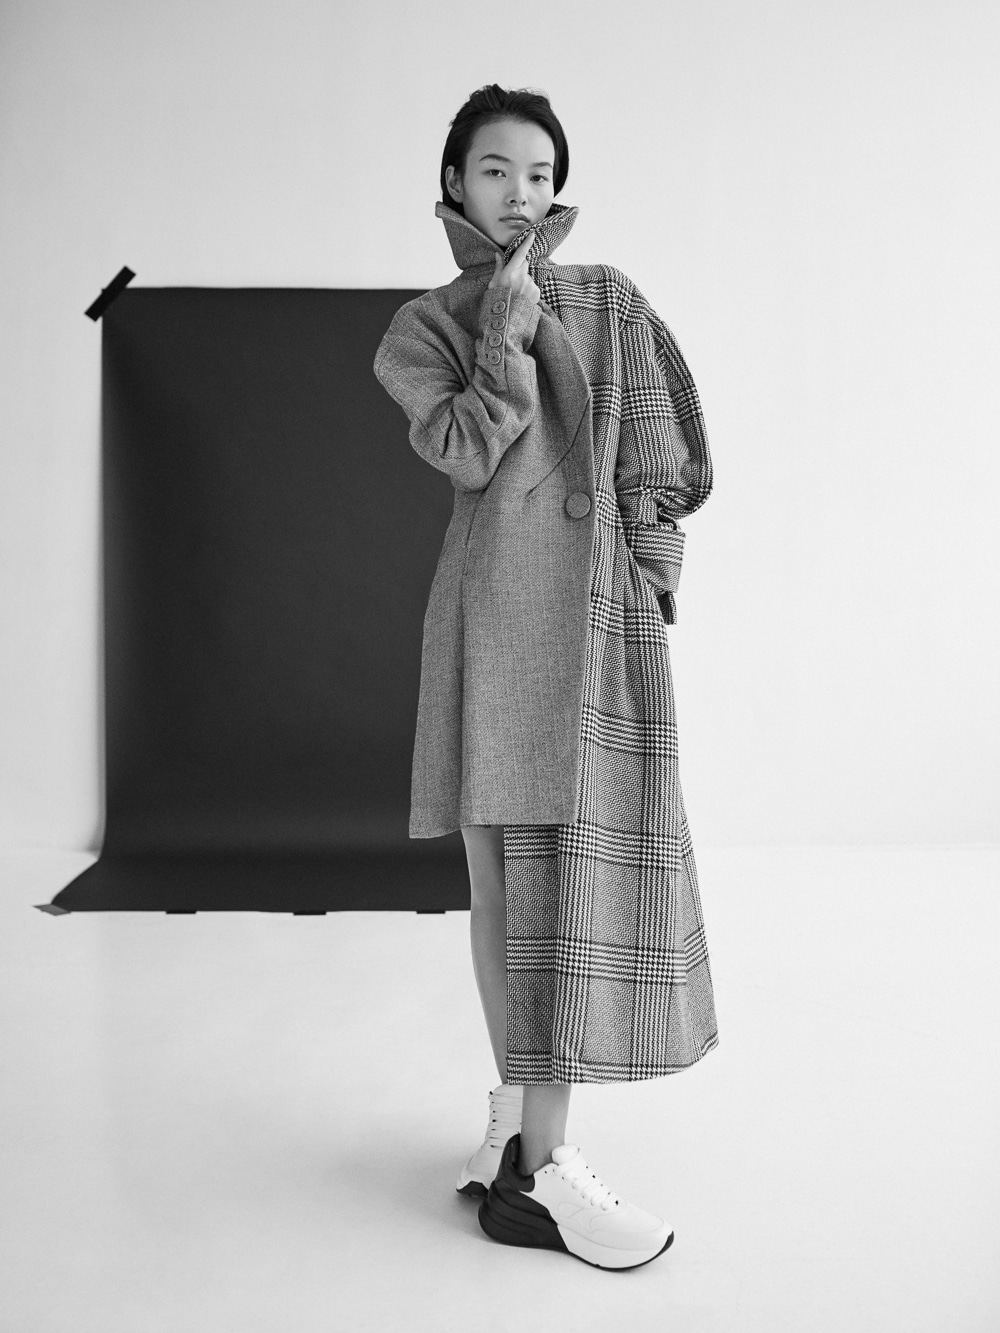 Vogue-Taiwan-September-2018-Ling-Liu-by-Zoltan-Tombor-3.jpg